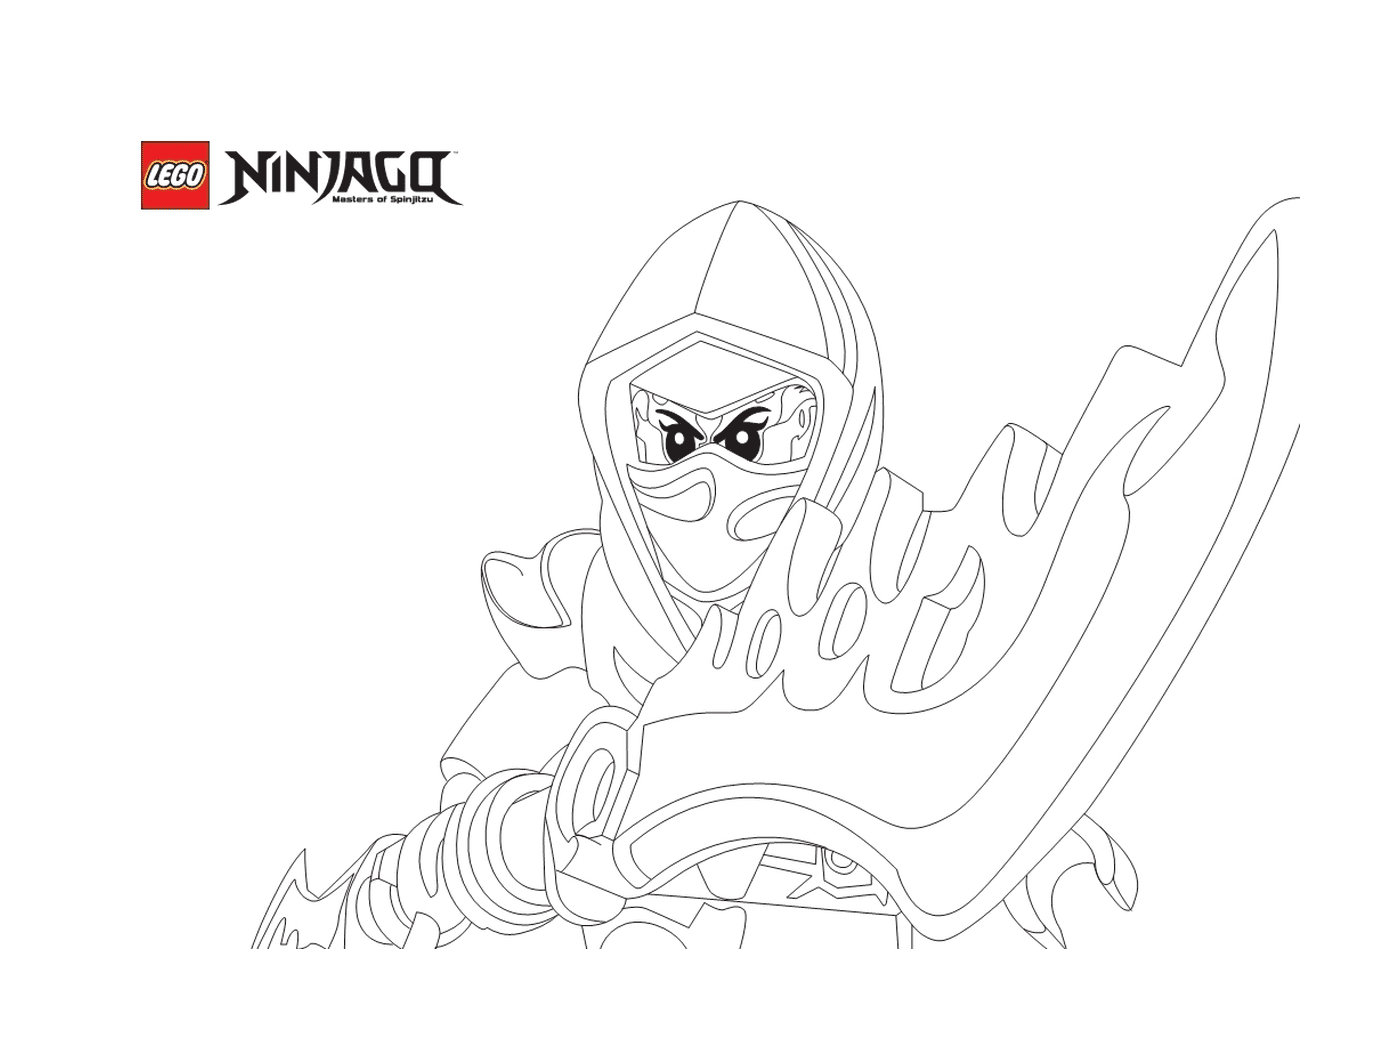   Ninjago avec épée prêt à attaquer 